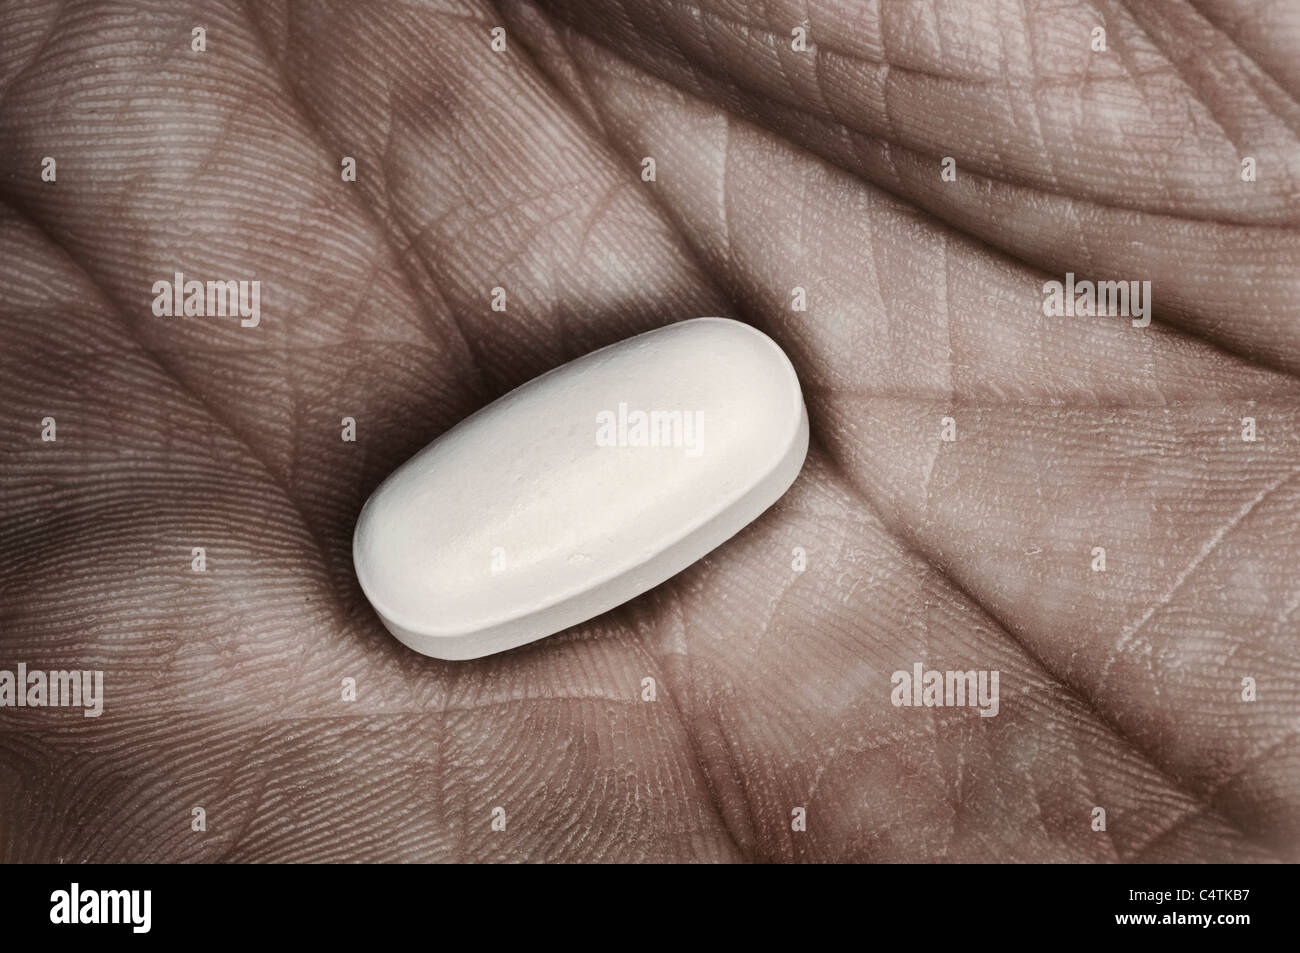 Sola pastilla en la mano del hombre, close-up Foto de stock